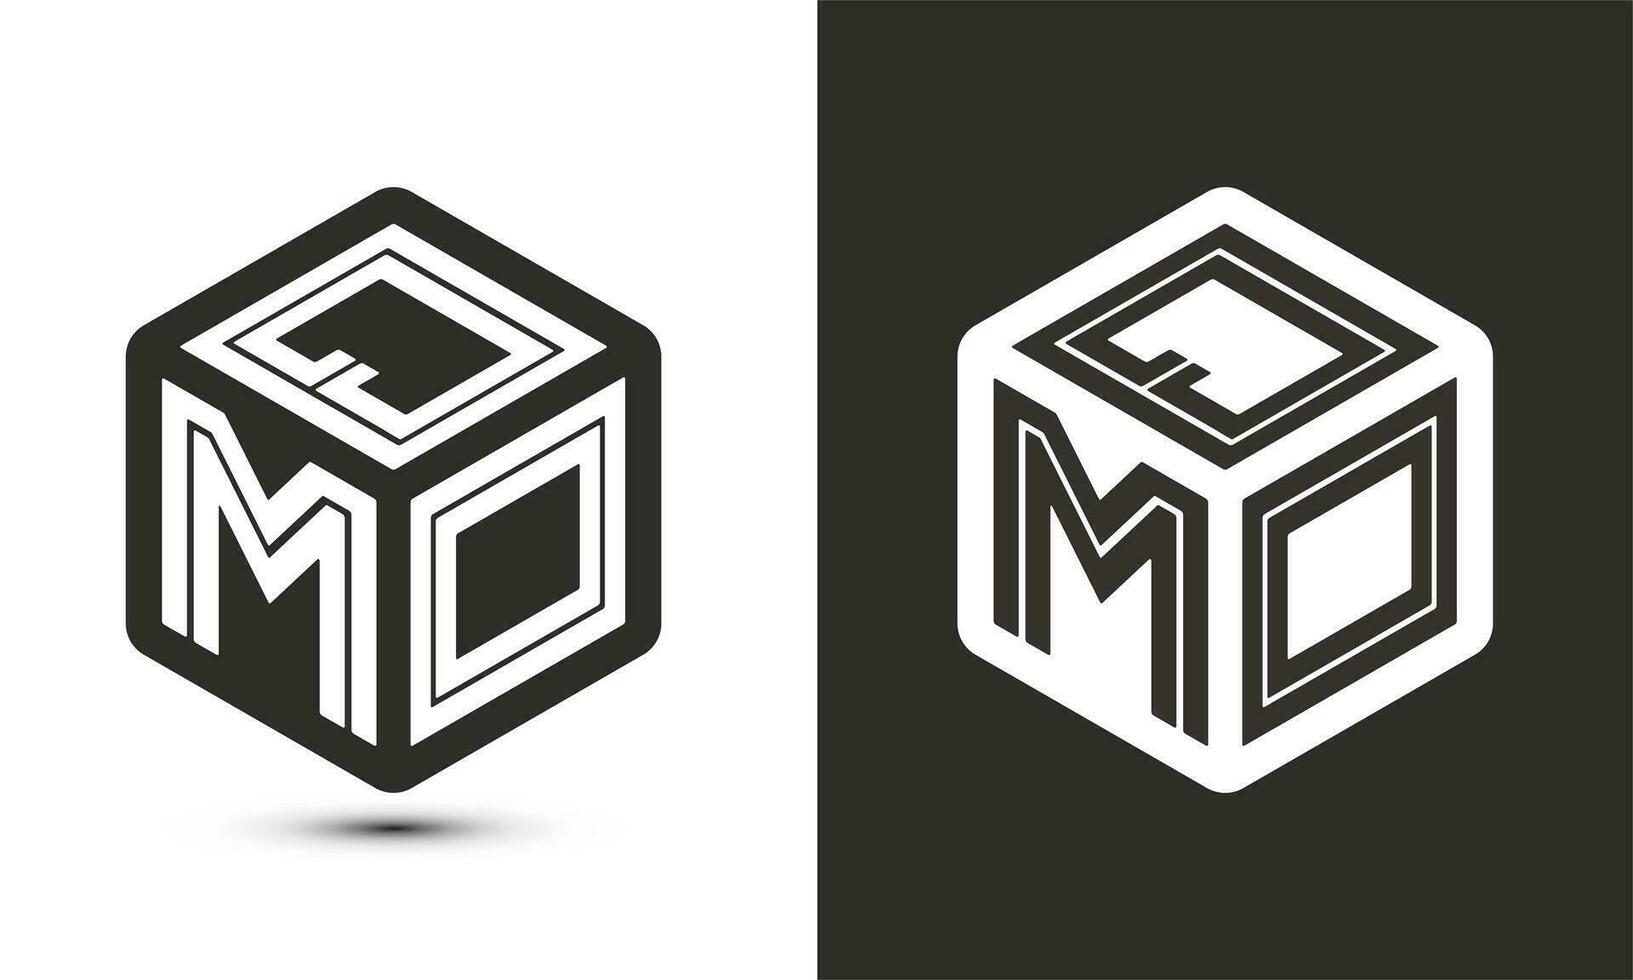 qmo letra logo diseño con ilustrador cubo logo, vector logo moderno alfabeto fuente superposición estilo.